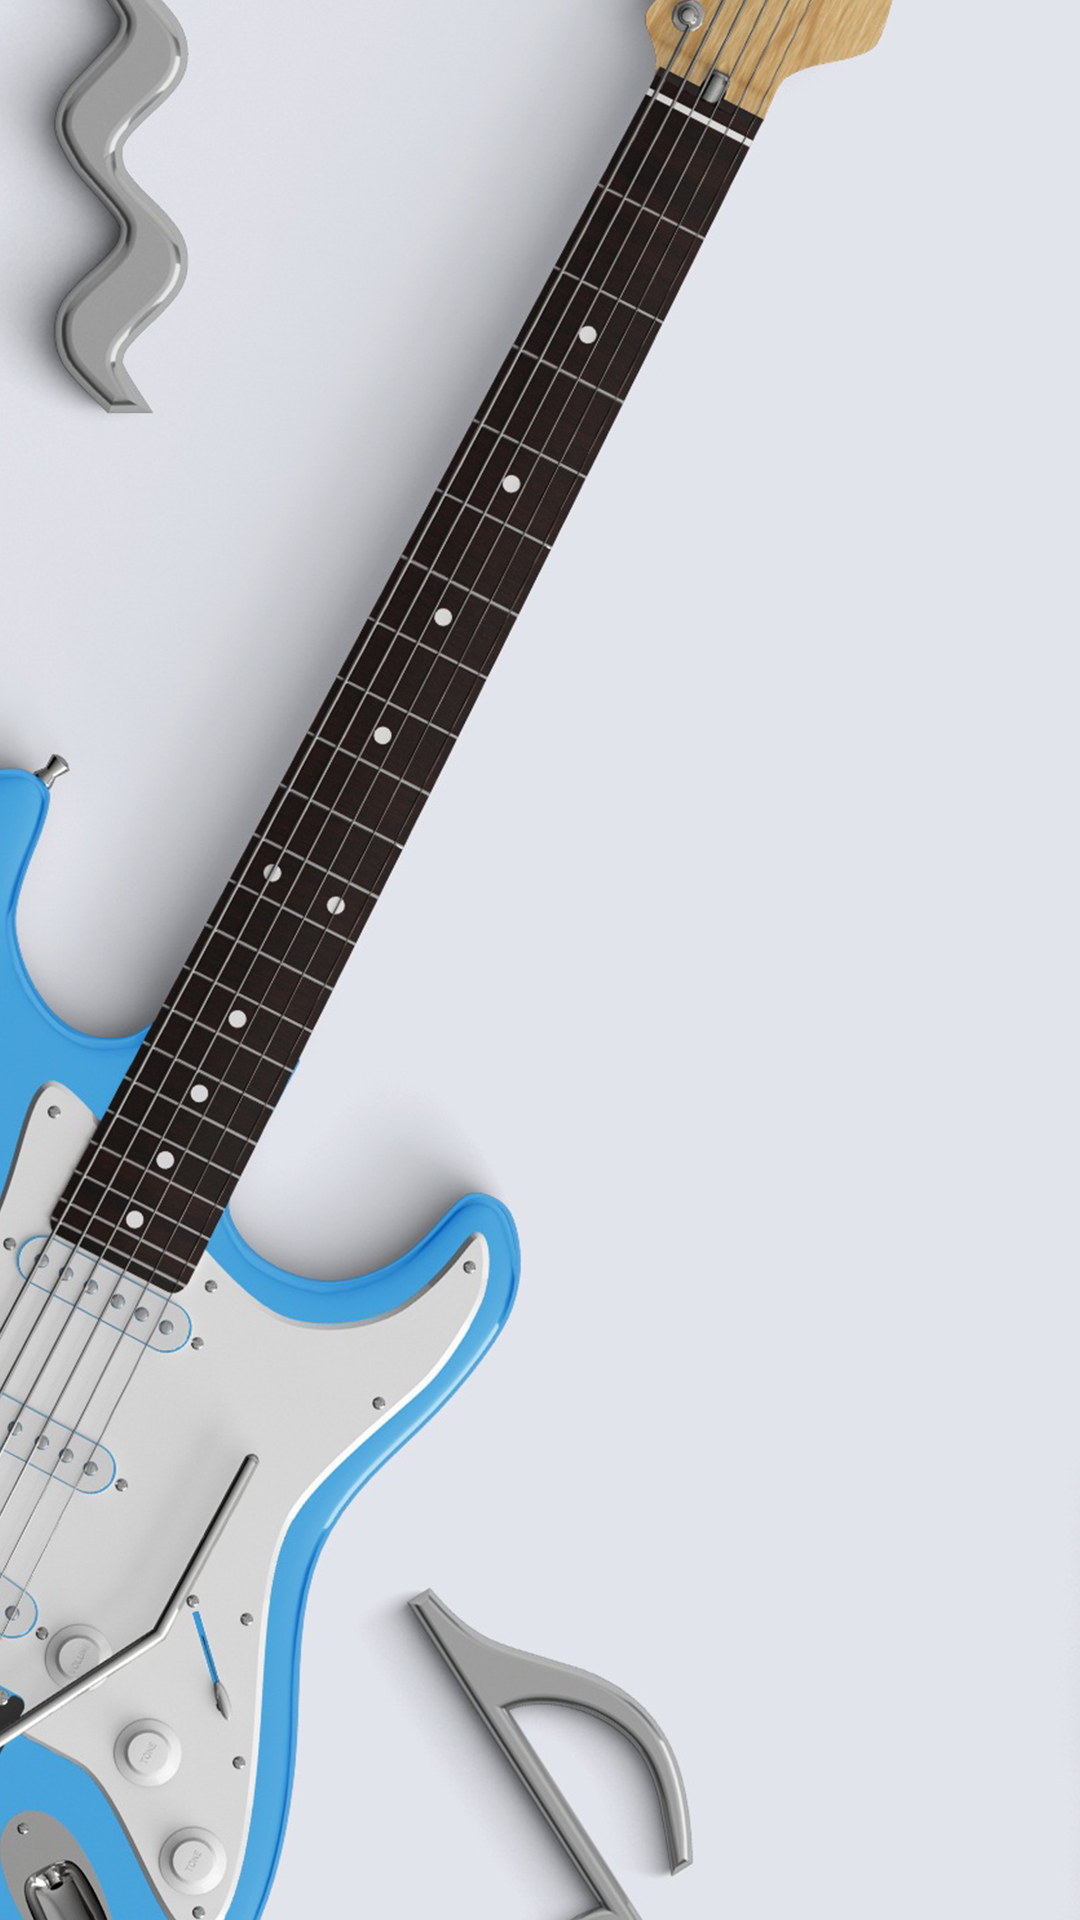 guitar wallpaper hd android,guitar,string instrument,musical instrument,electric guitar,string instrument